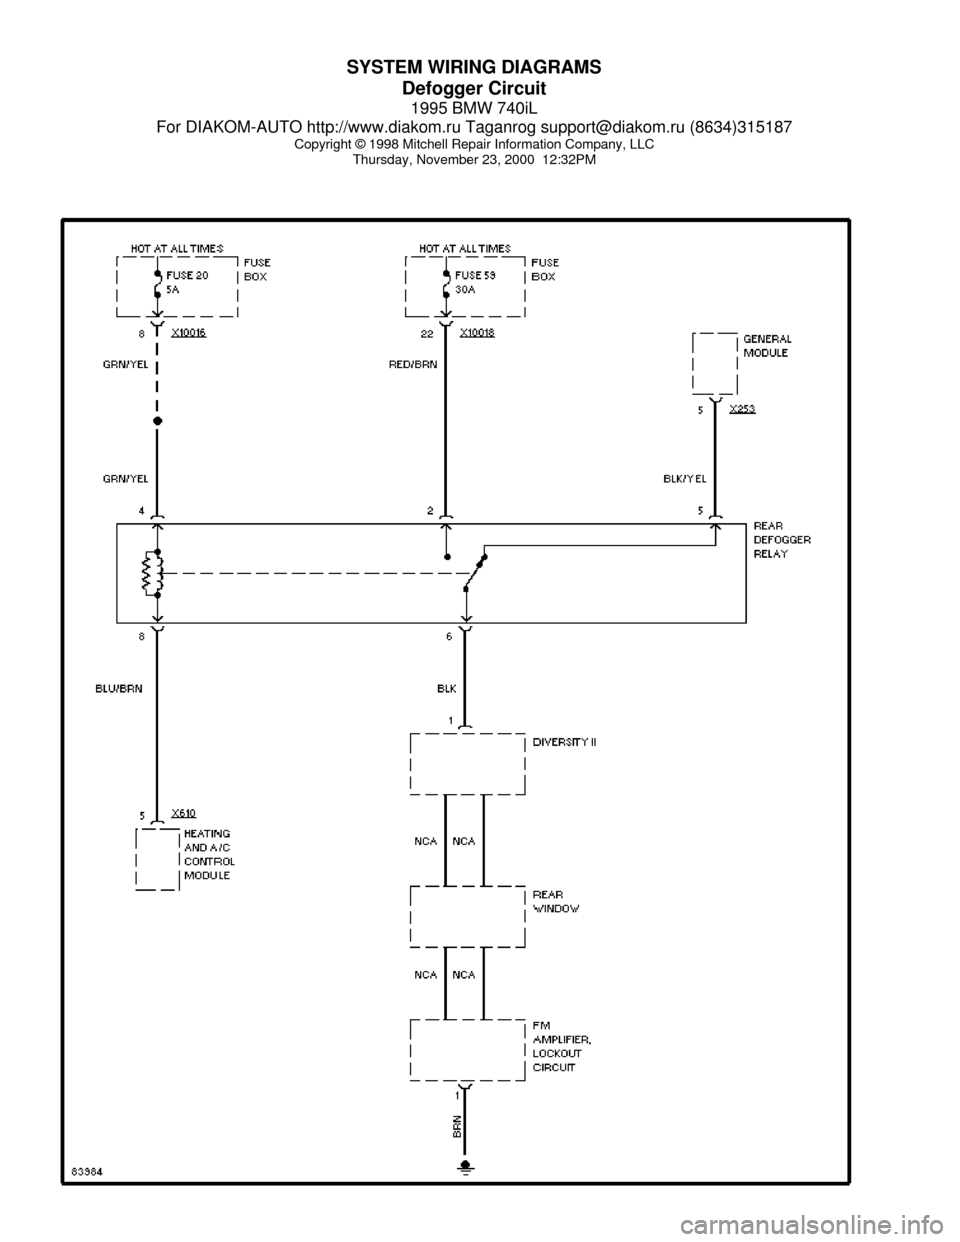 BMW 740il 1995 E38 System Wiring Diagrams SYSTEM WIRING DIAGRAMS
Defogger Circuit
1995 BMW 740iL
For DIAKOM-AUTO http://www.diakom.ru Taganrog support@diakom.ru (8634)315187
Copyright © 1998 Mitchell Repair Information Company, LLC
Thursday,